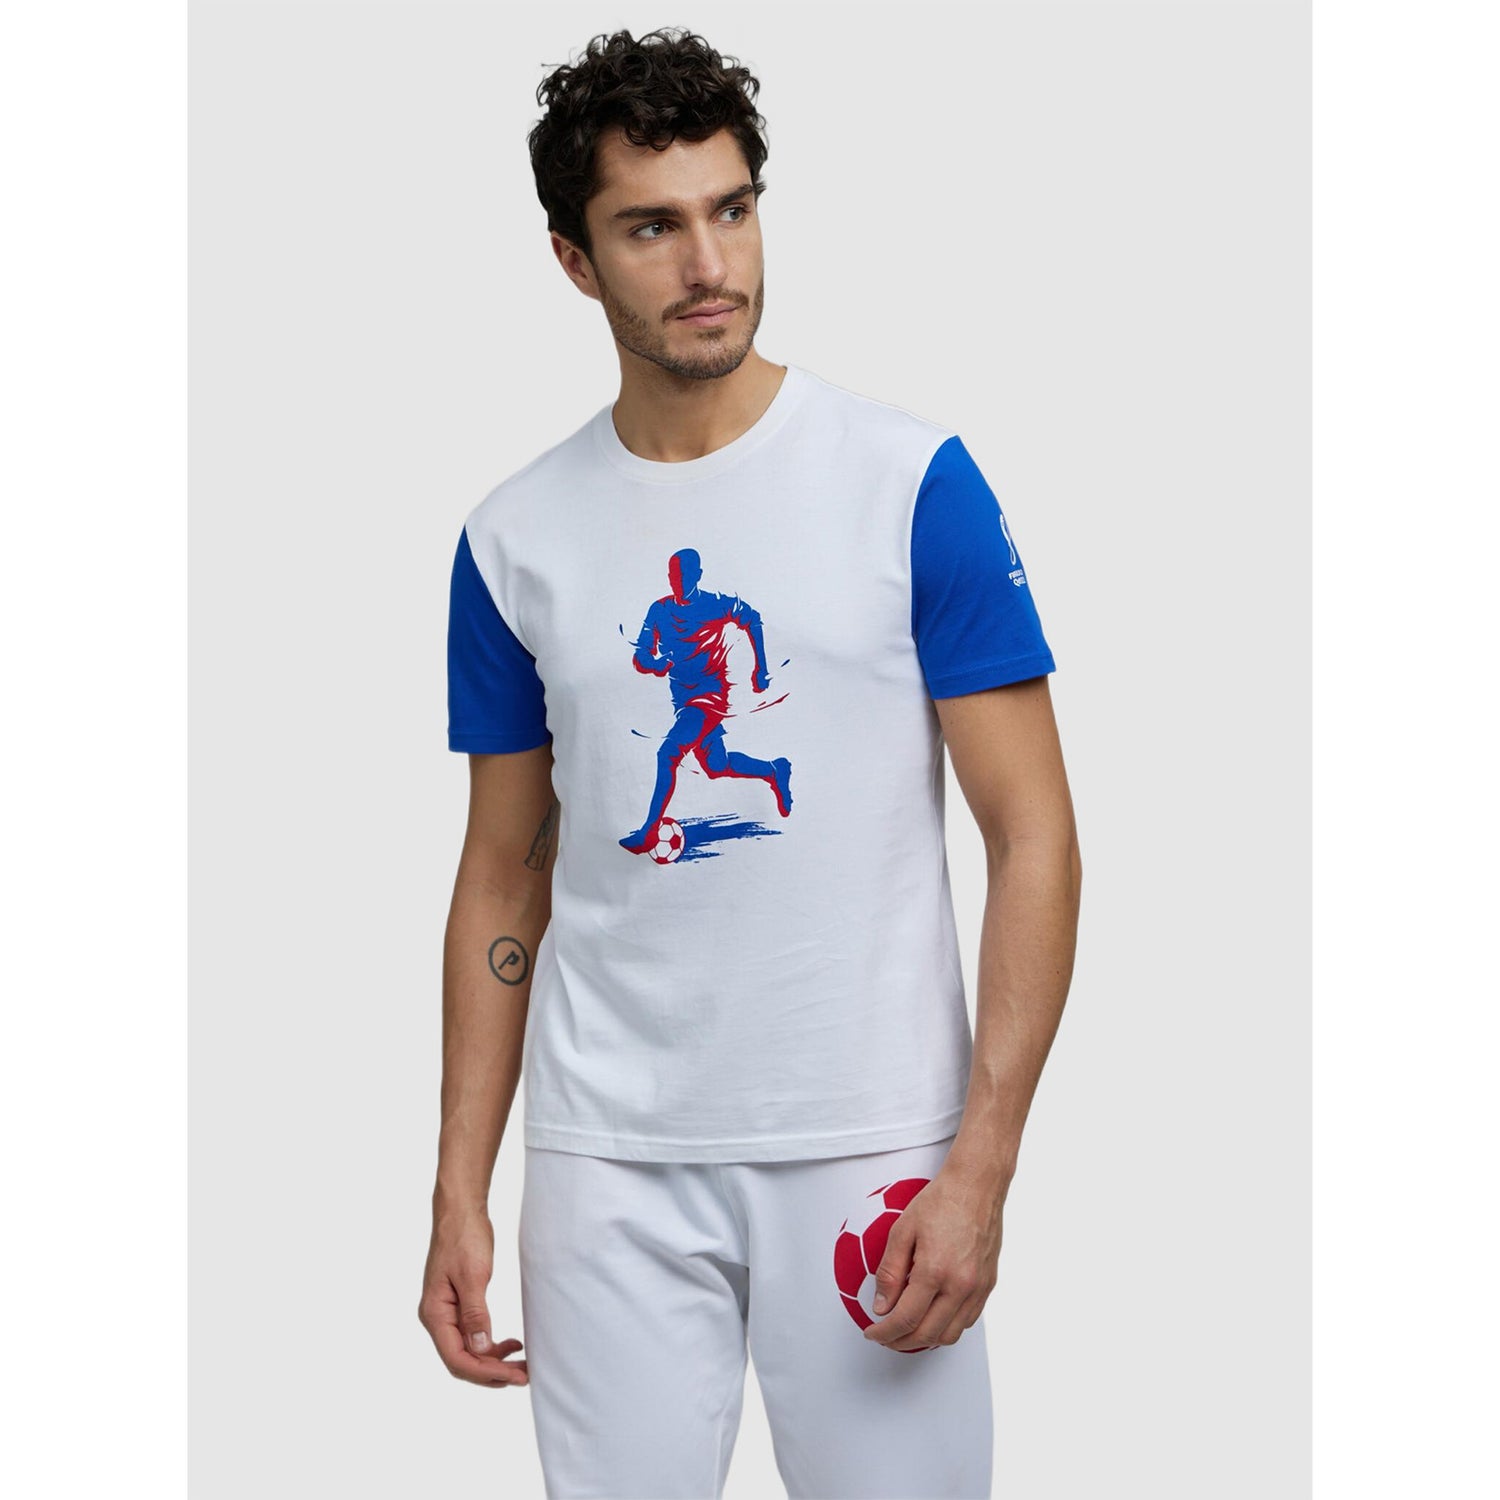 FIFA - White Printed Cotton T-shirt (LCEFIFAC3)